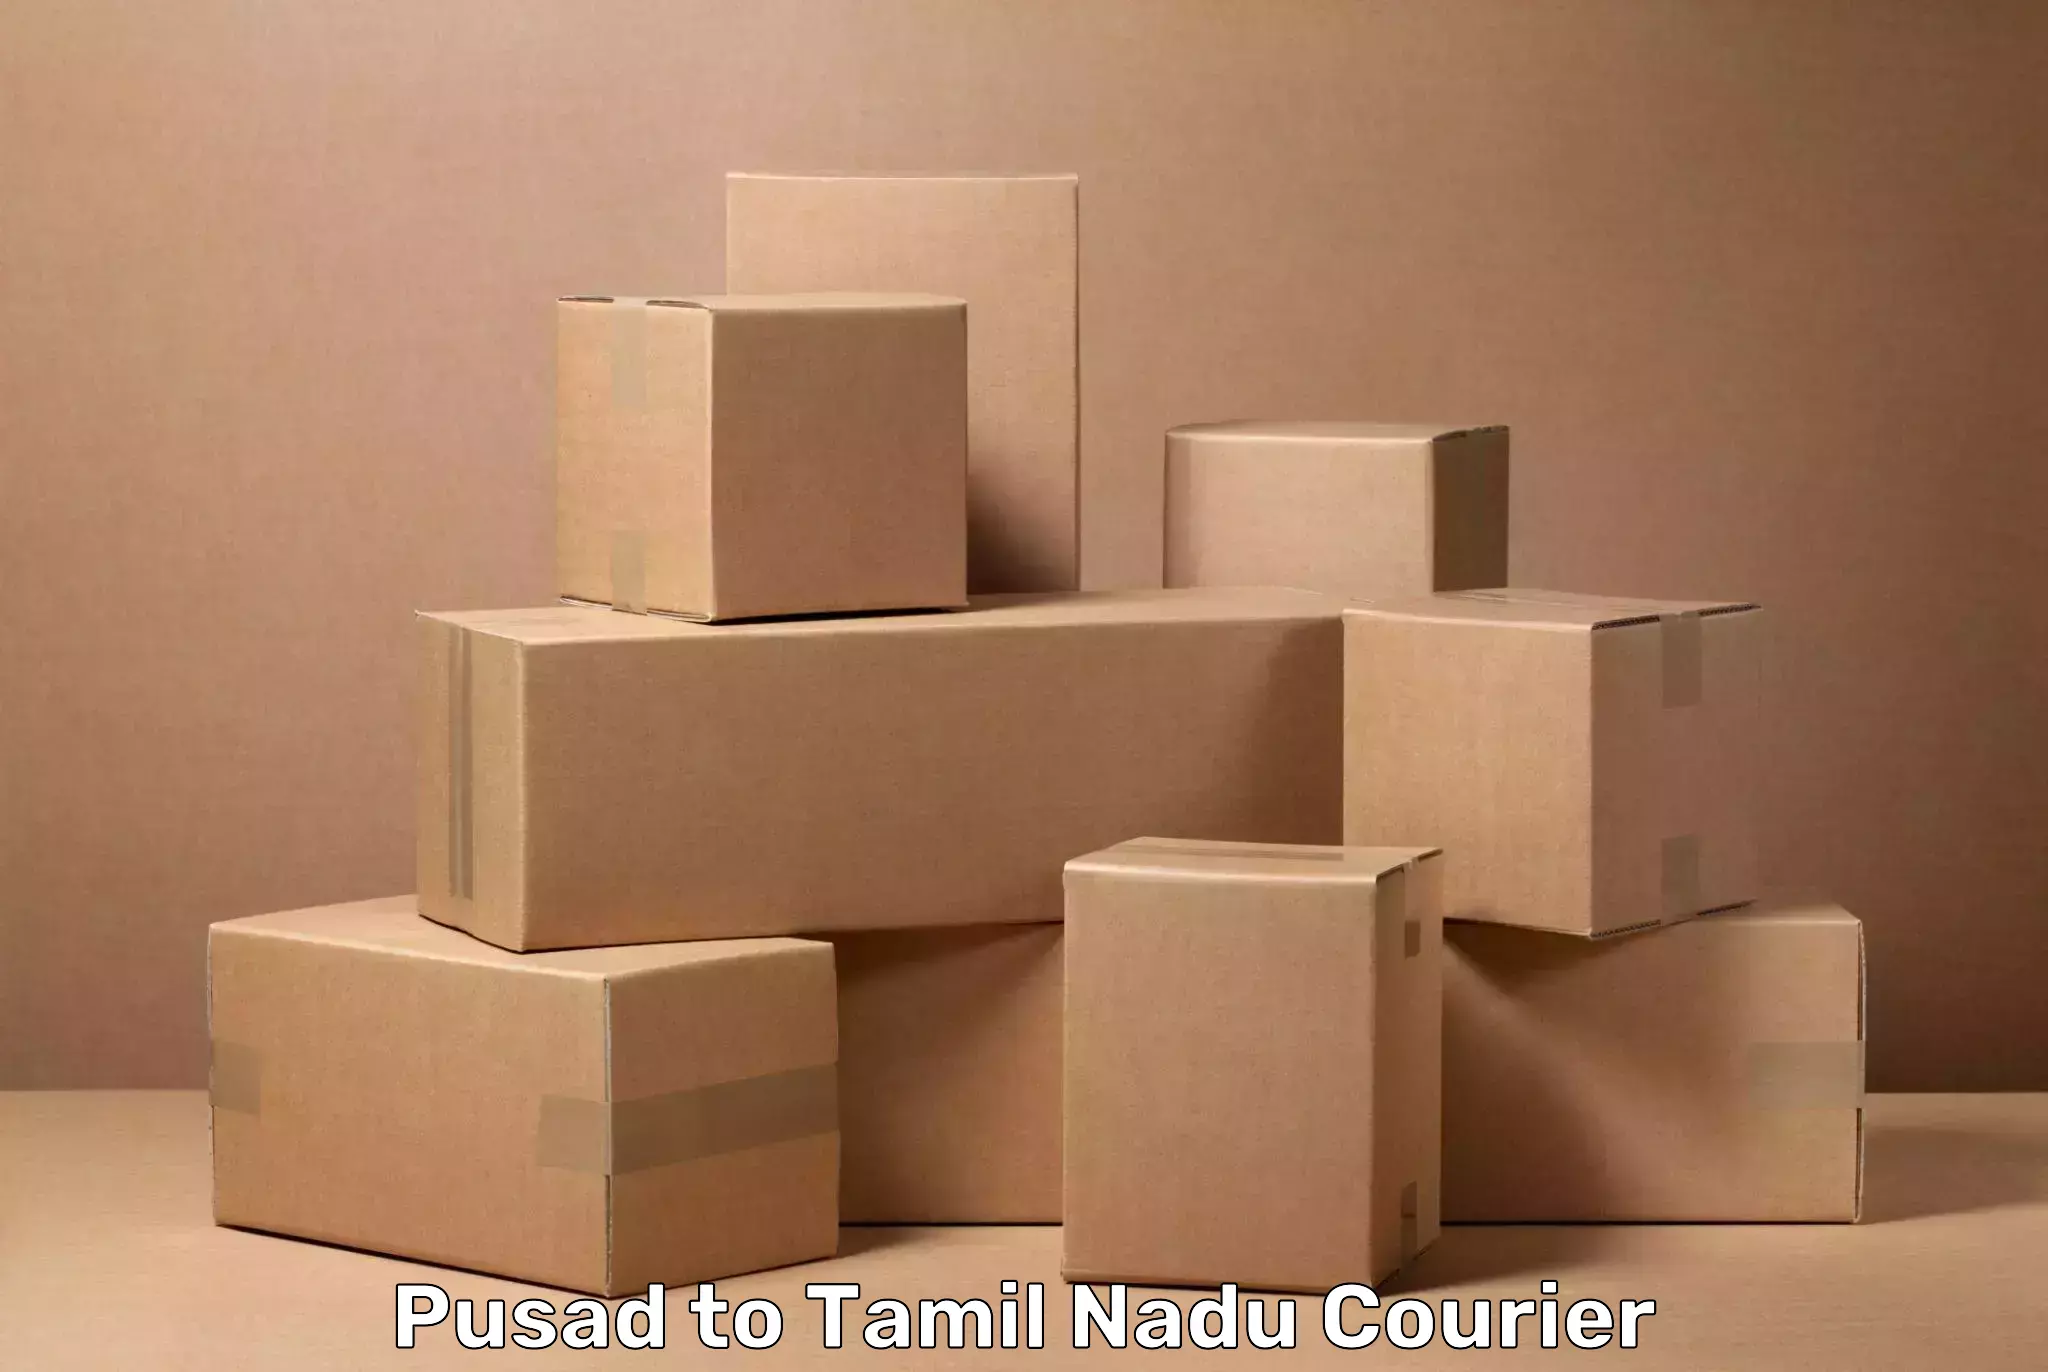 Luggage shipment specialists Pusad to Tamil Nadu